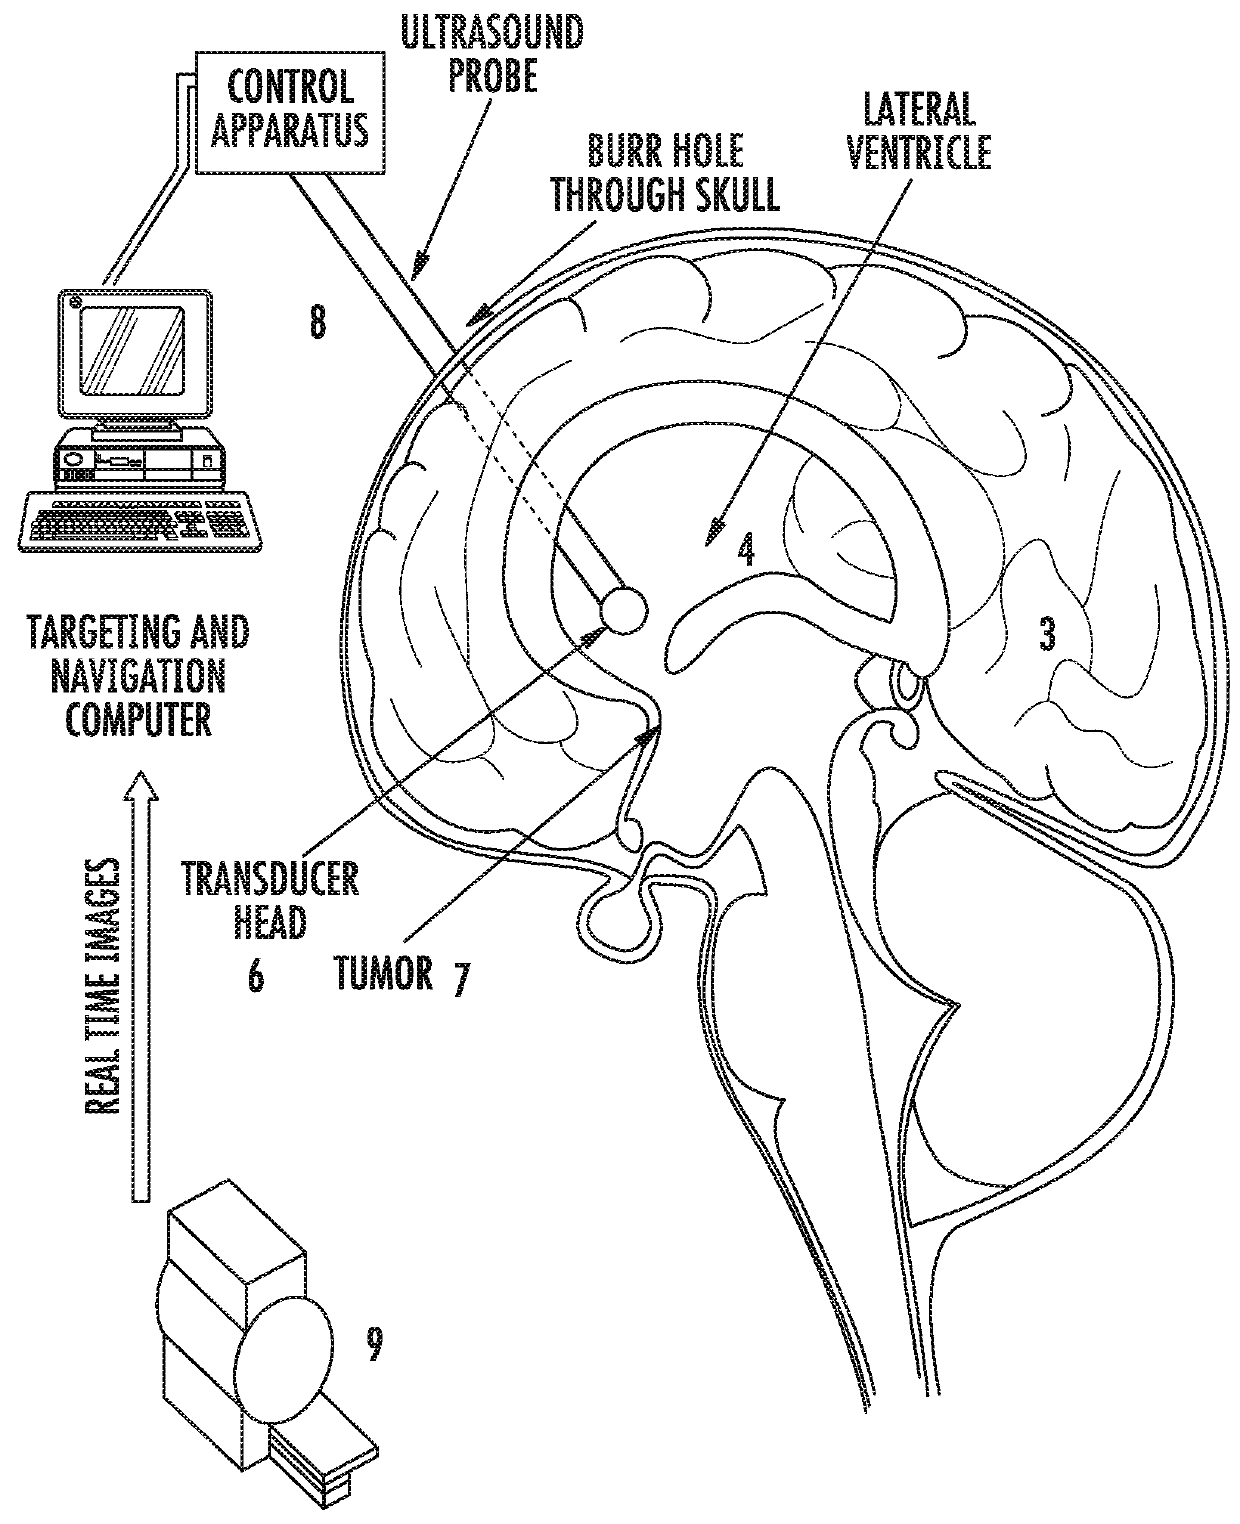 Minimally Invasive Focused Ultrasound (MIFUS) for Brain Surgery